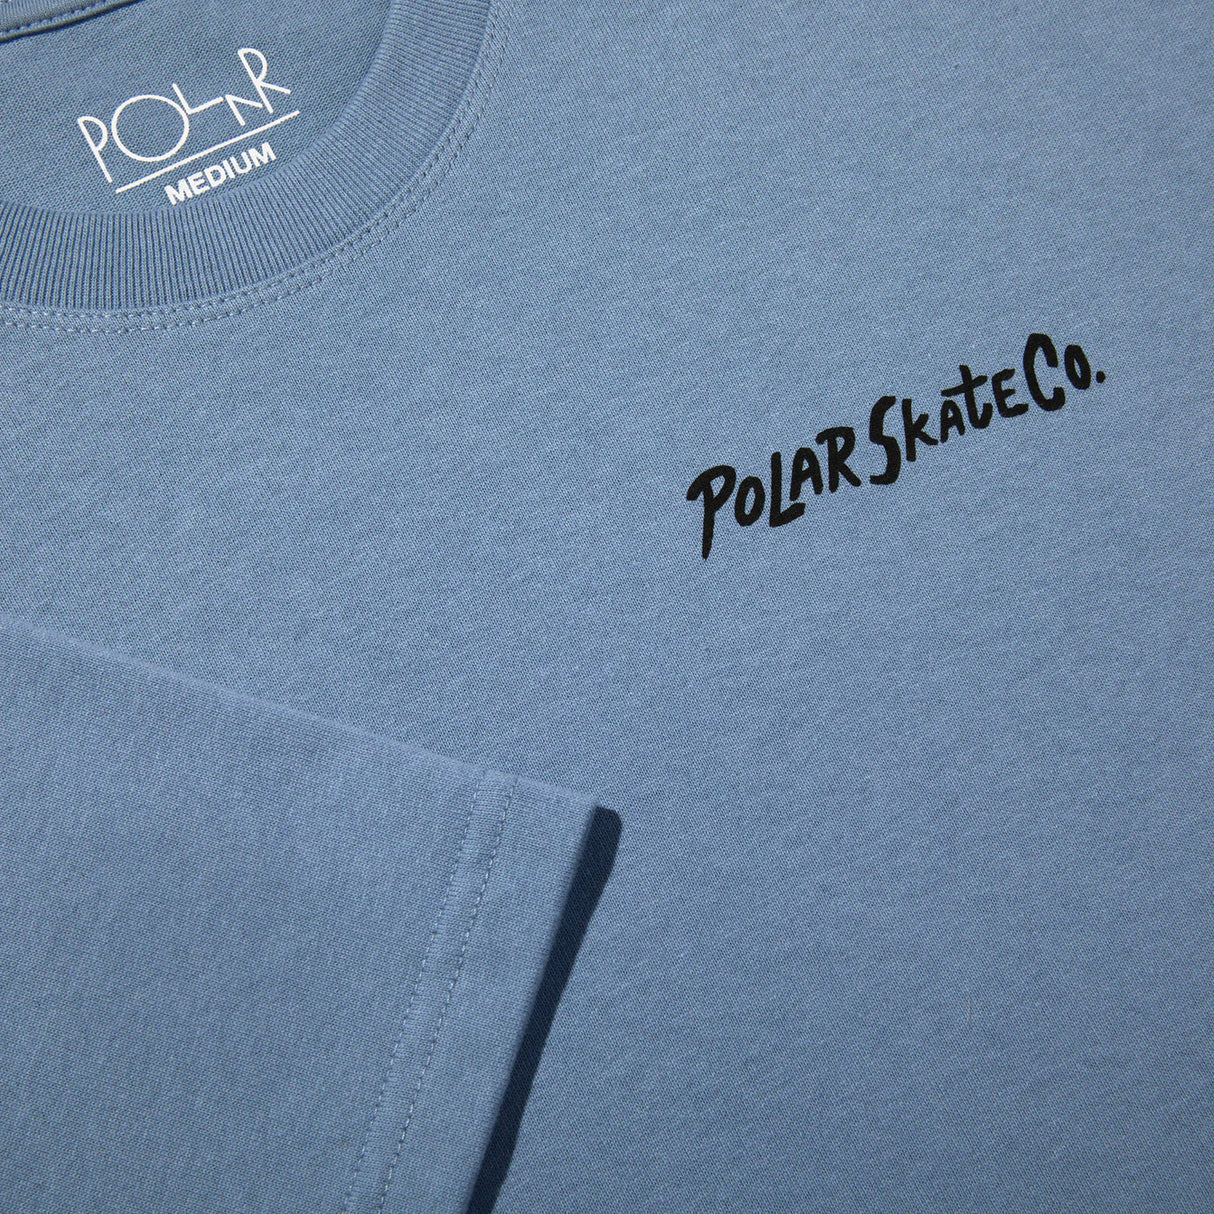 Polar Skate Co Yoga Trippin' T-Shirt